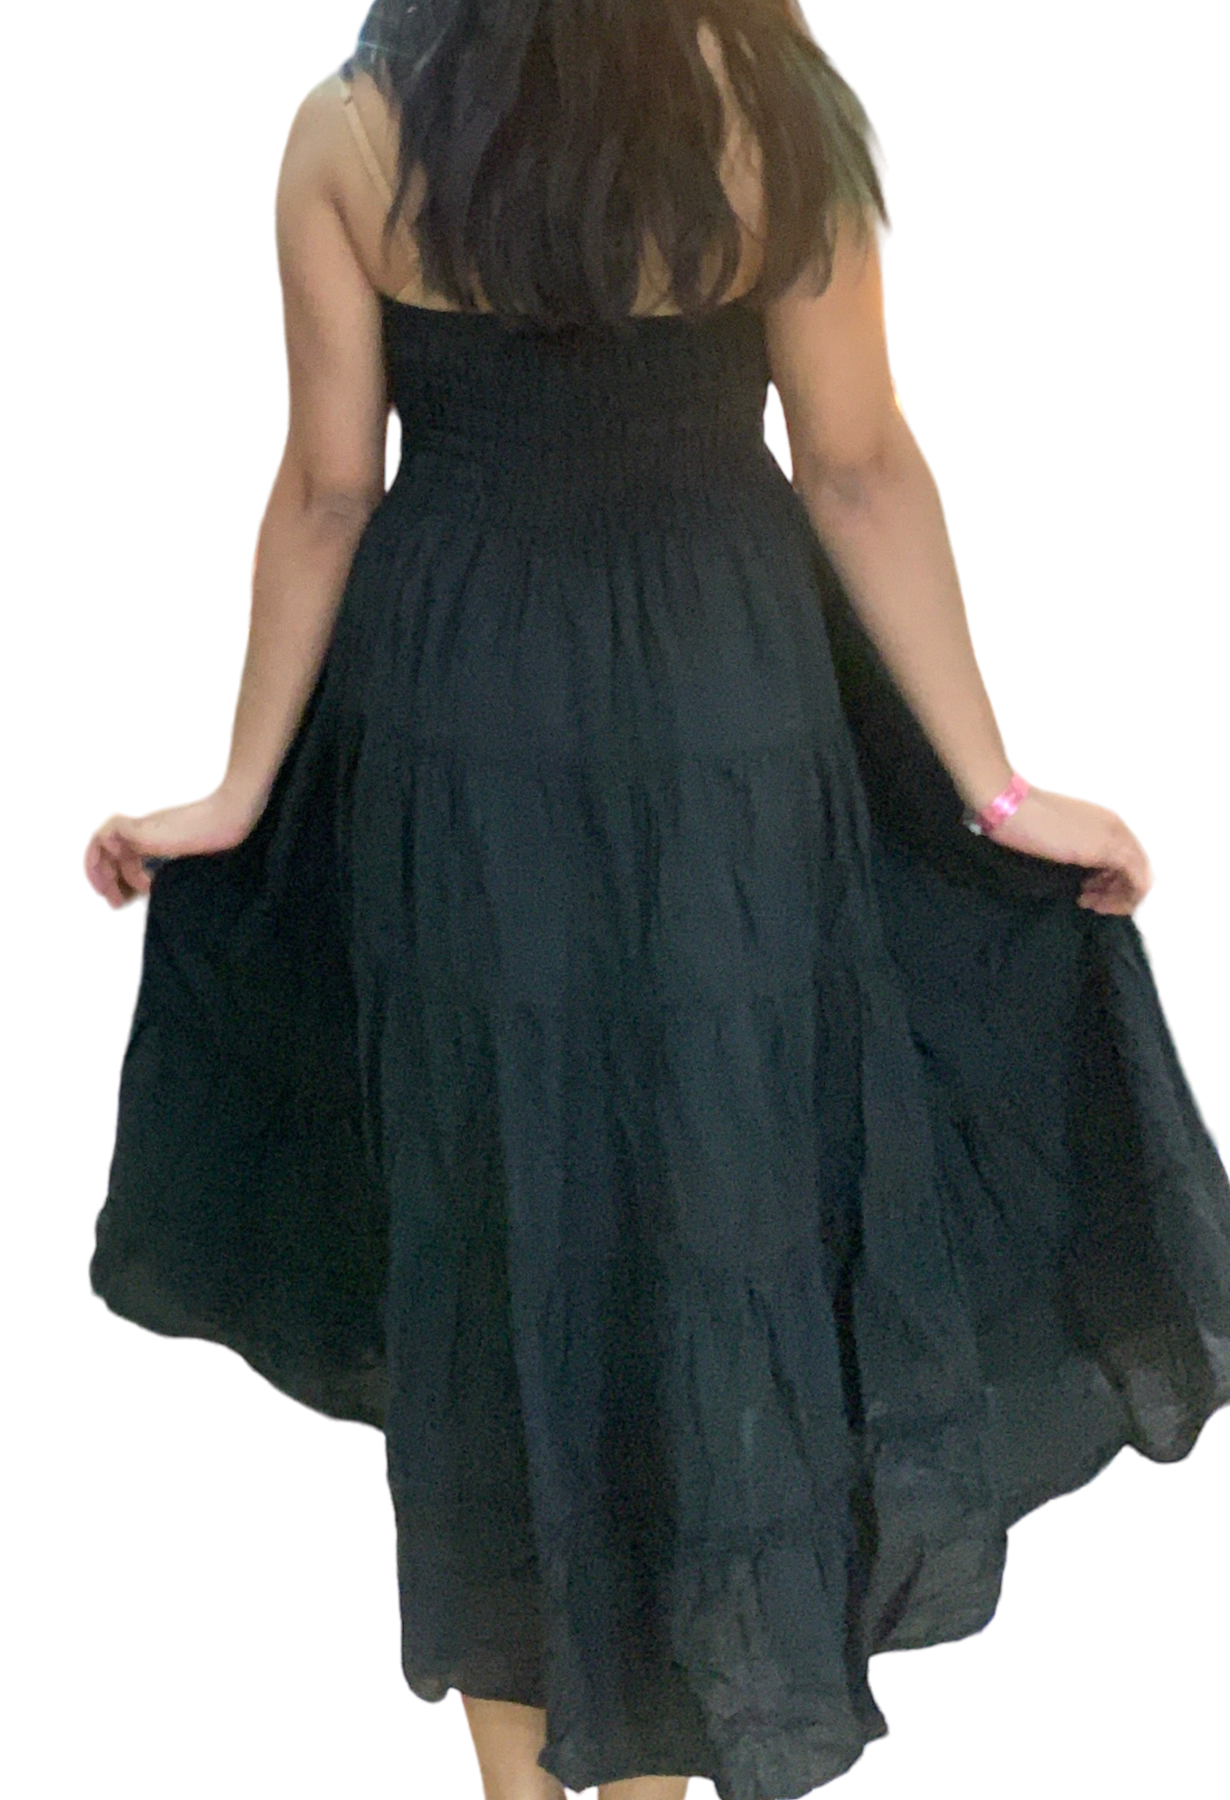 Black Cotton Voile Tiered Skirt